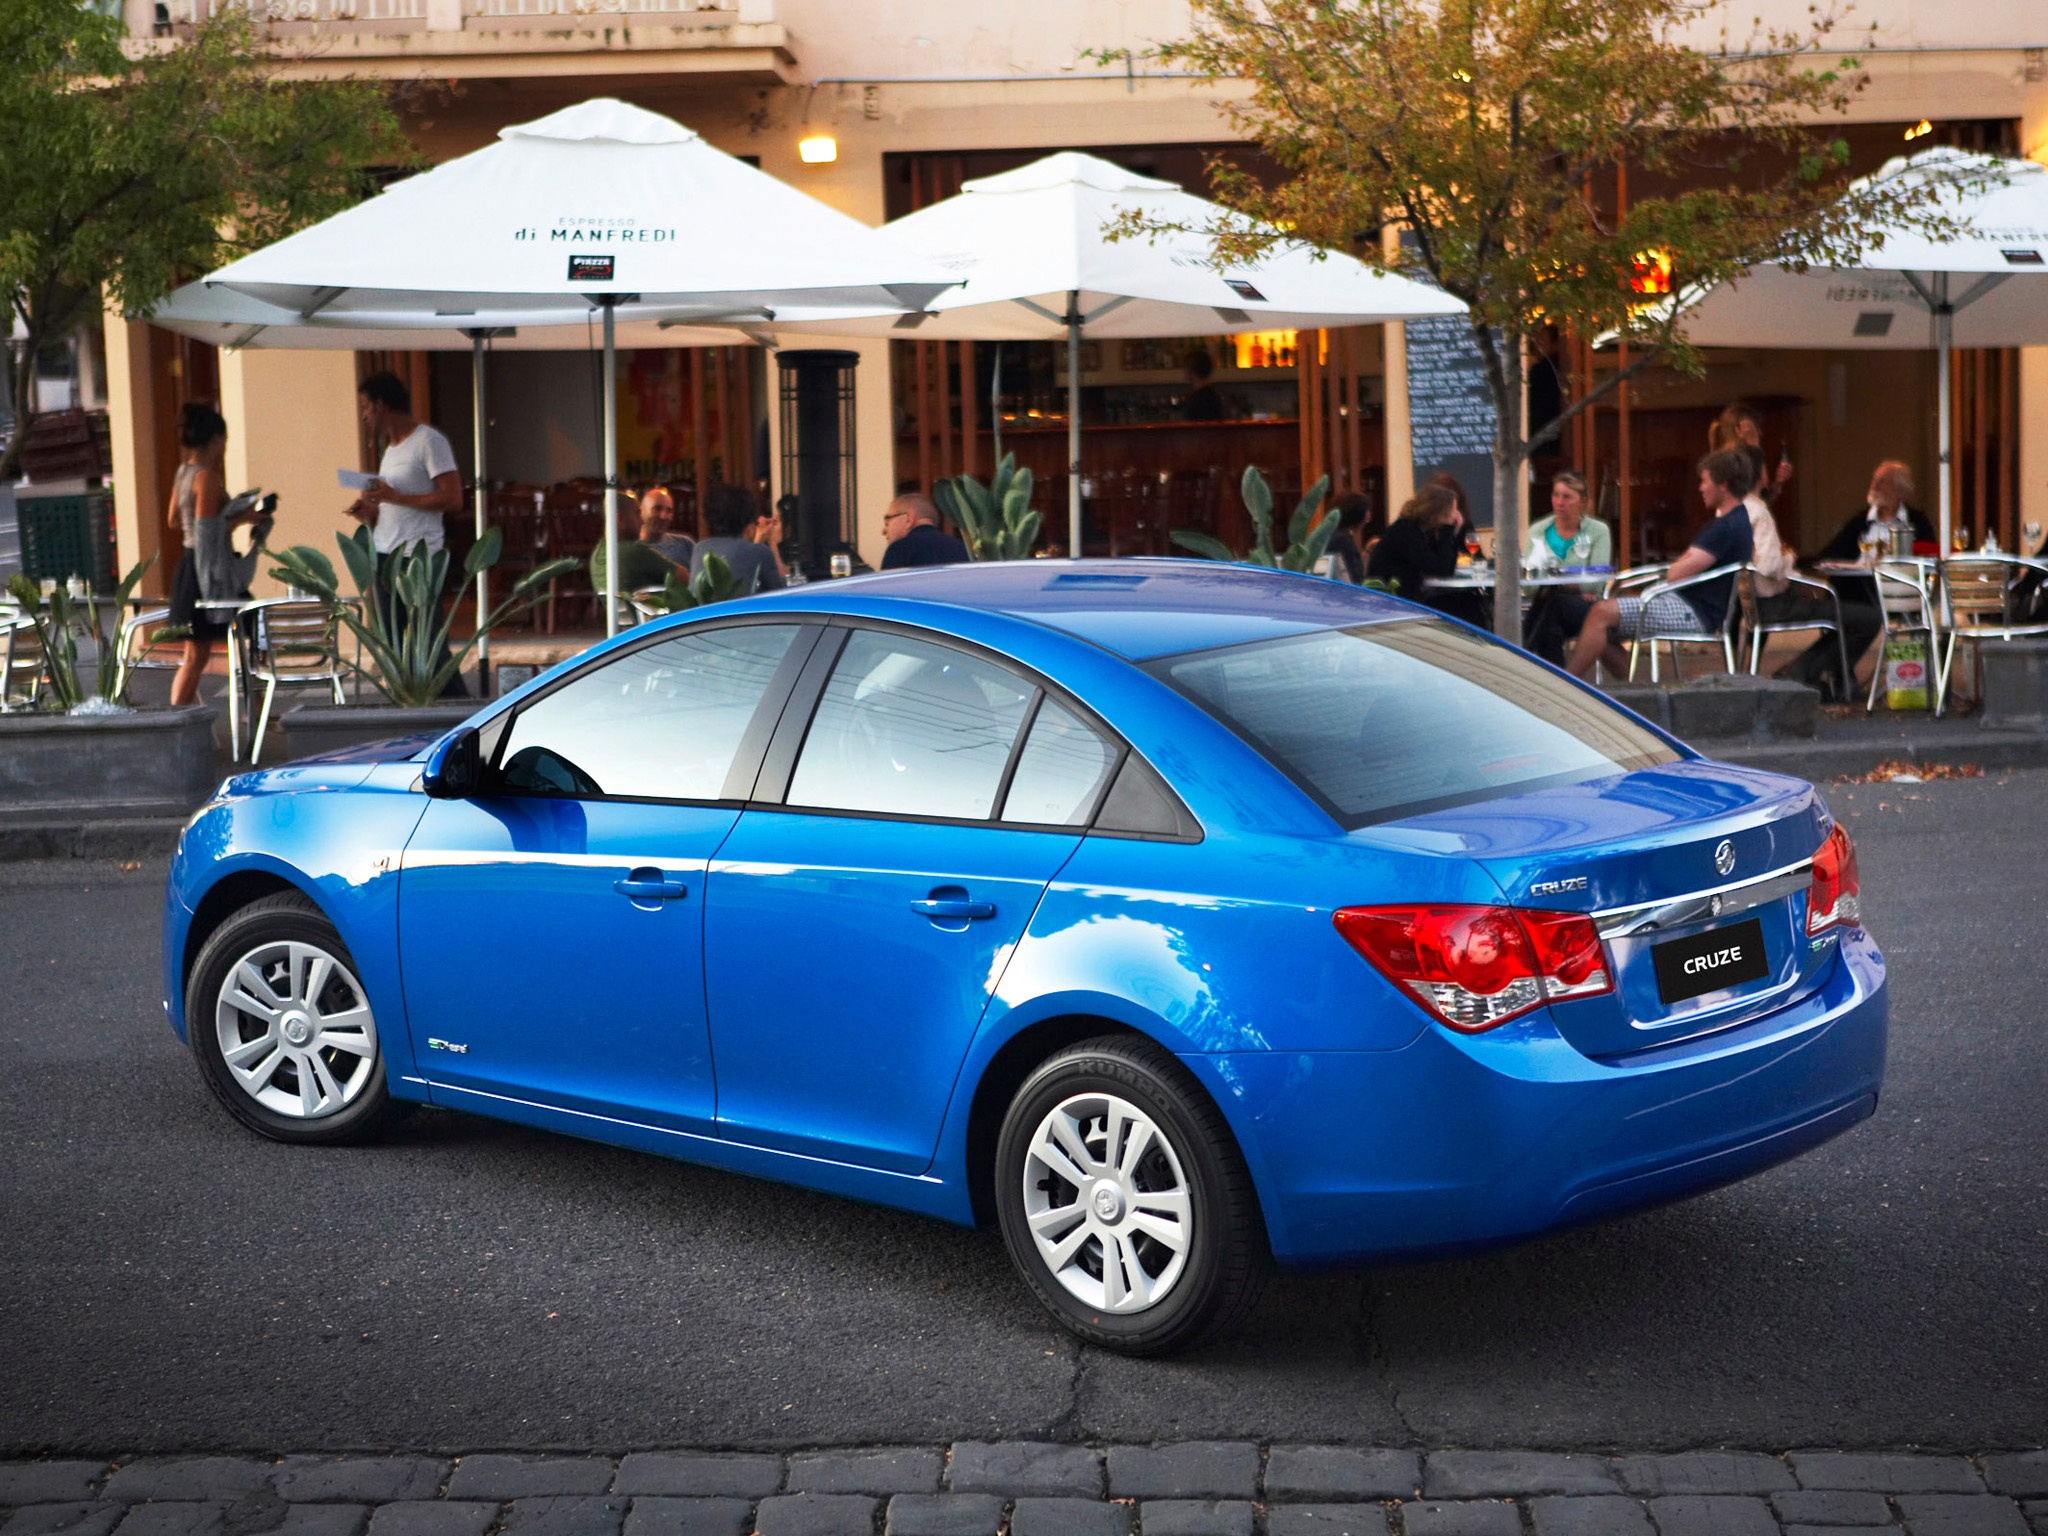 Шевроле круз б. Chevrolet Cruze 2009. Chevrolet Cruze Blue. Шевроле Круз синий. Chevrolet Cruze голубой.